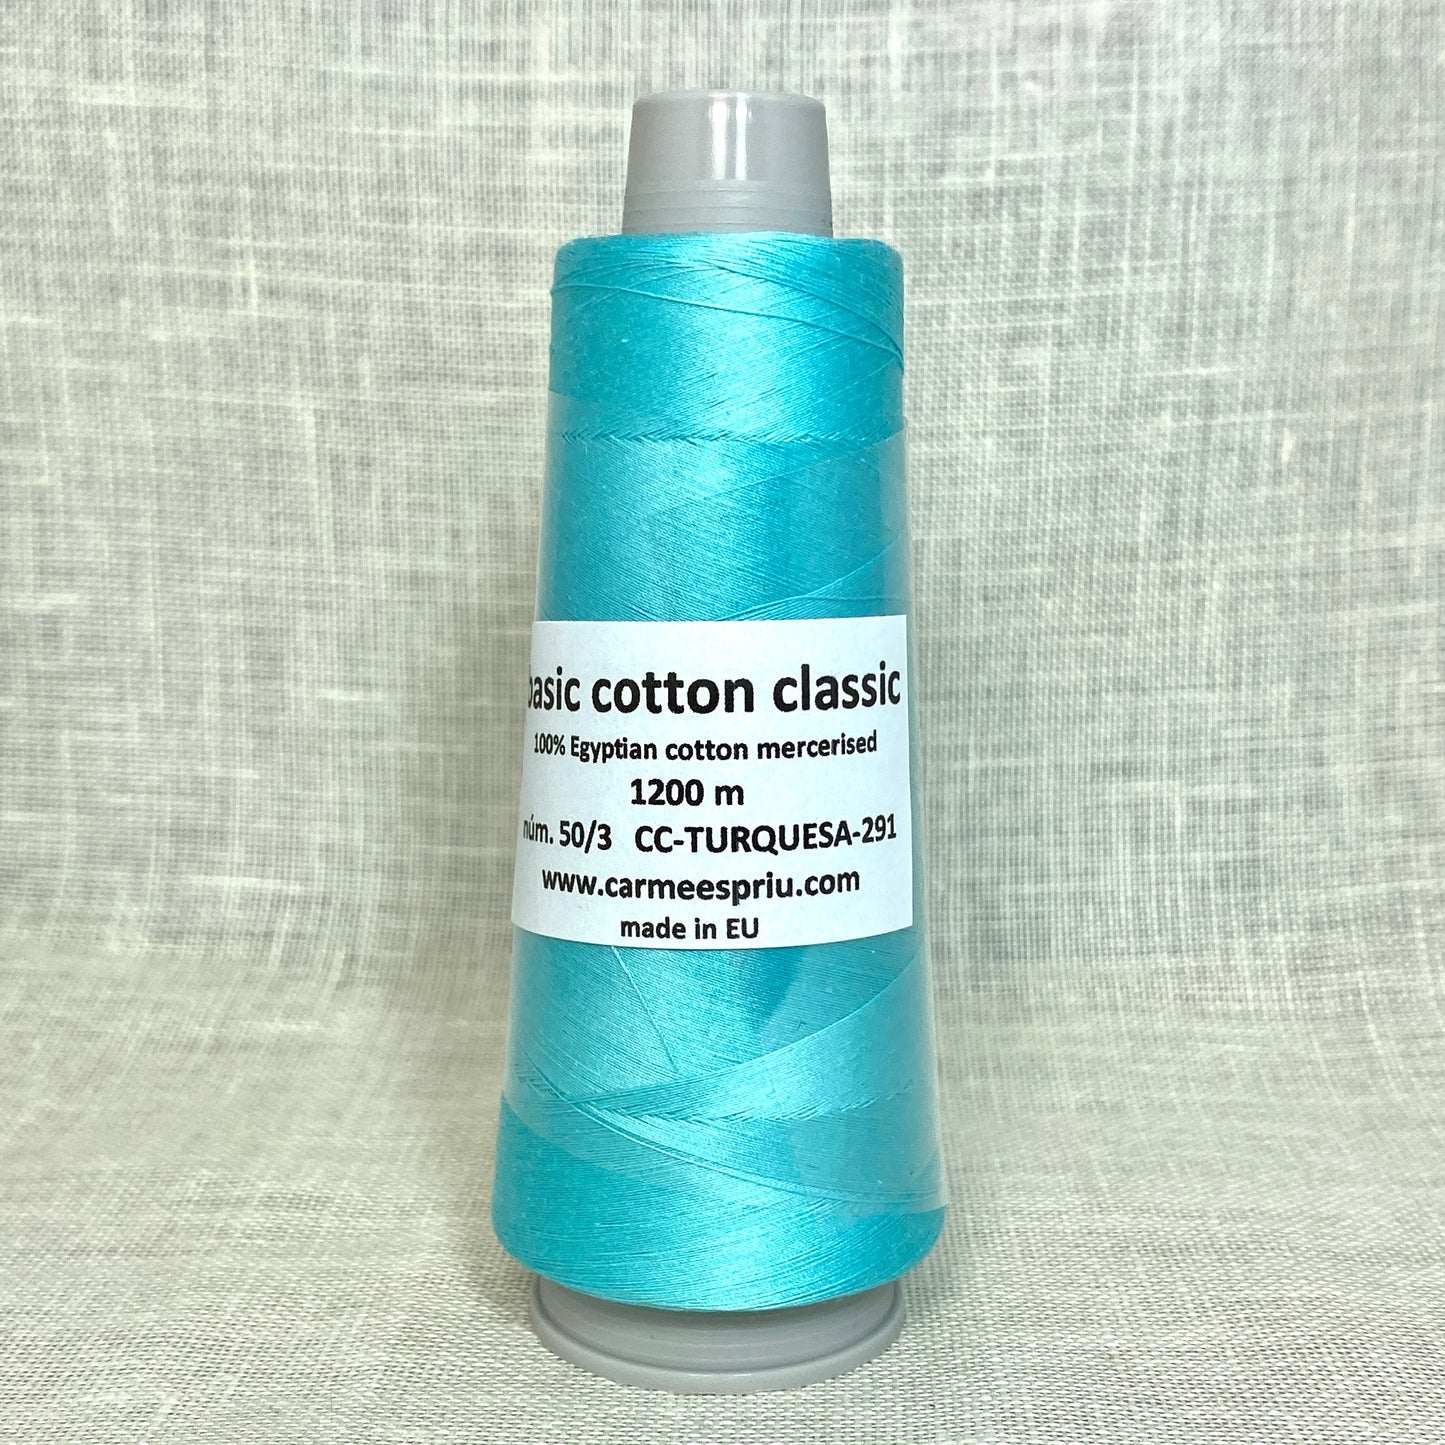 Basic cotton classic turquesa nº 291